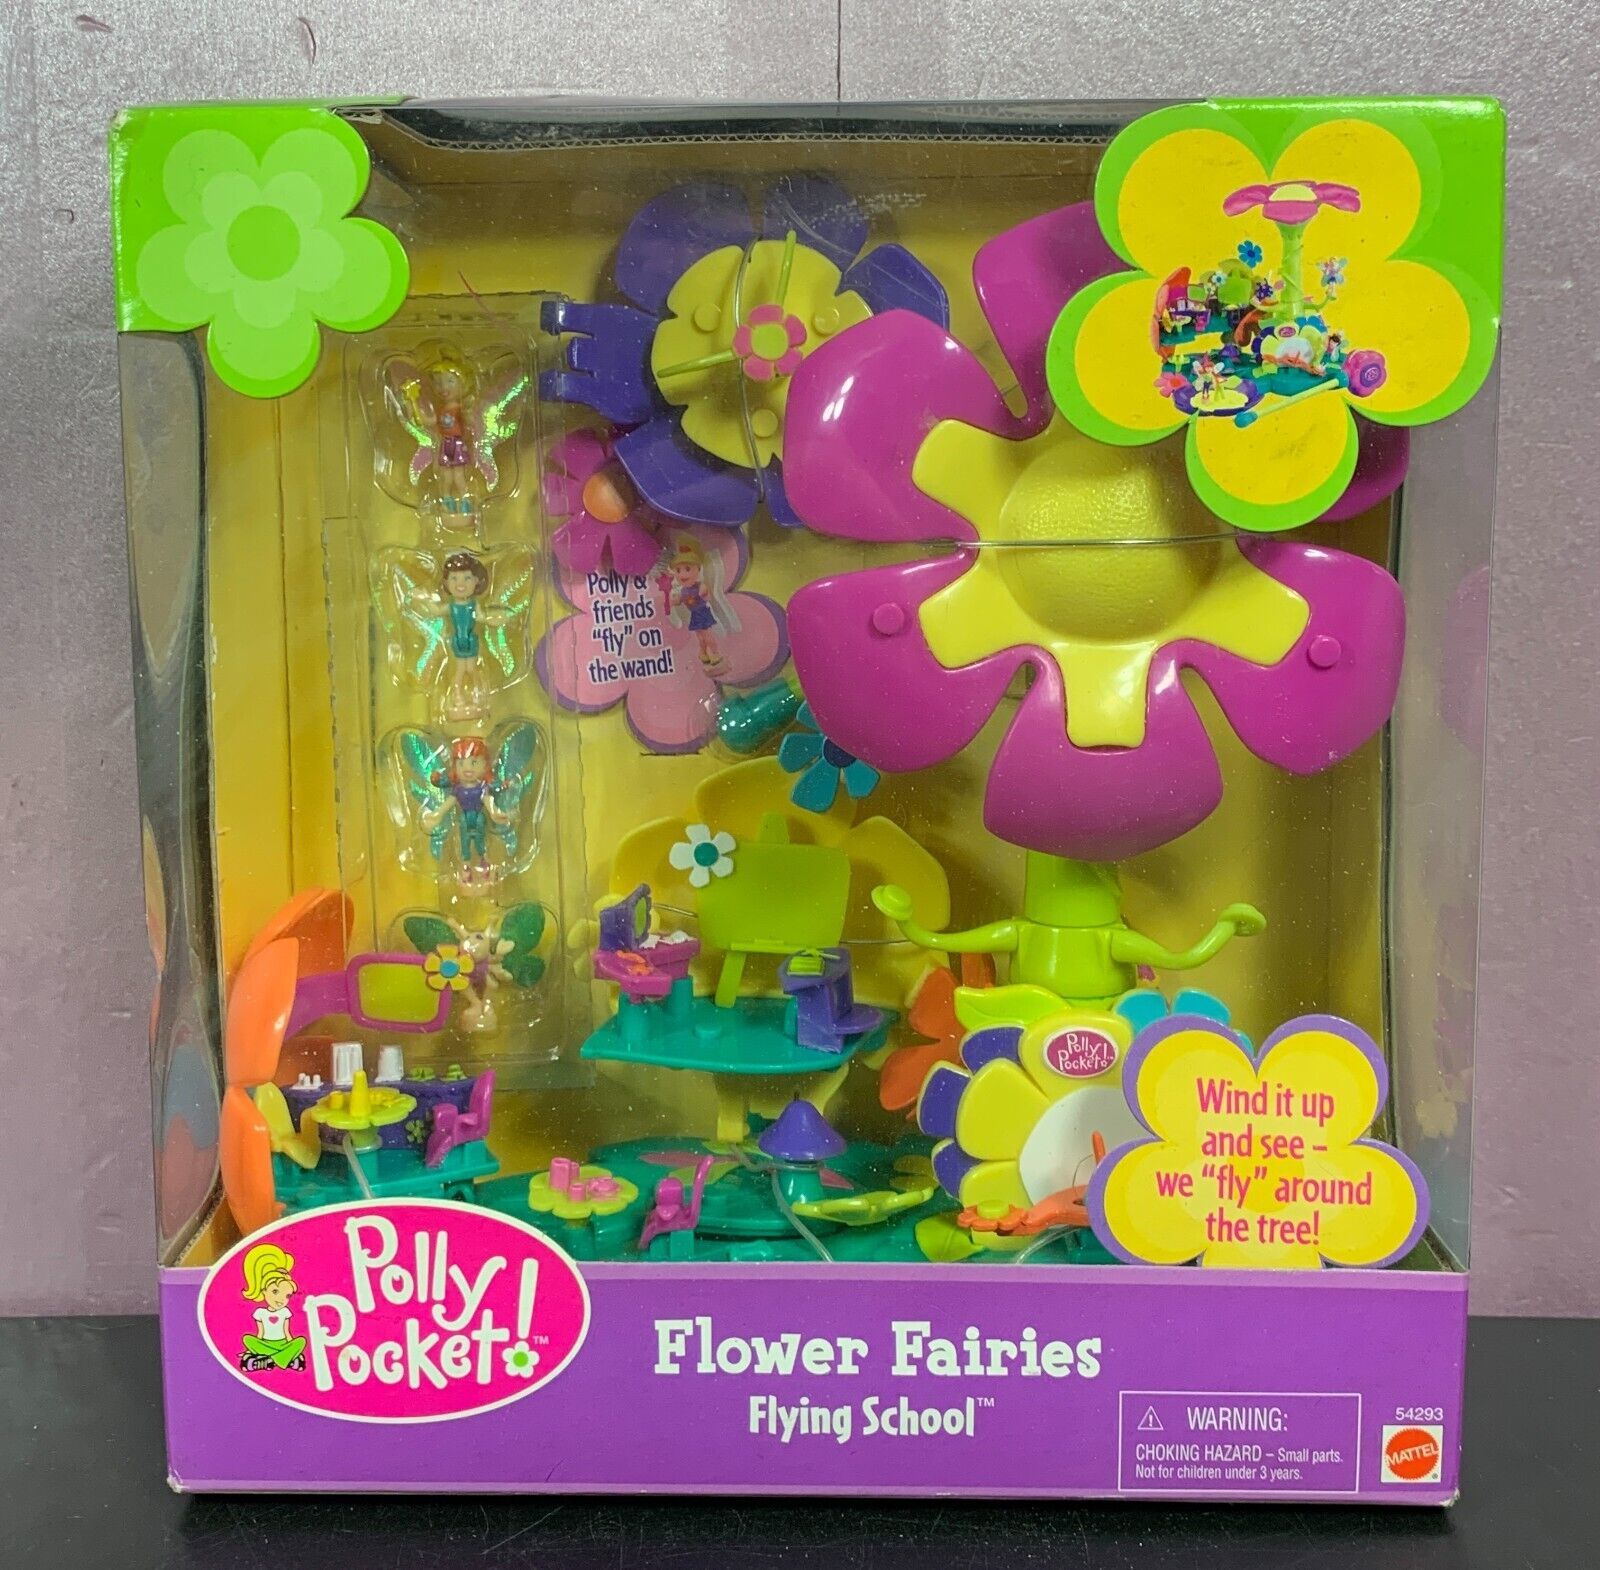 Polly Pocket Flower Fairies Flying School Playset 2001 Vintage - $49.49